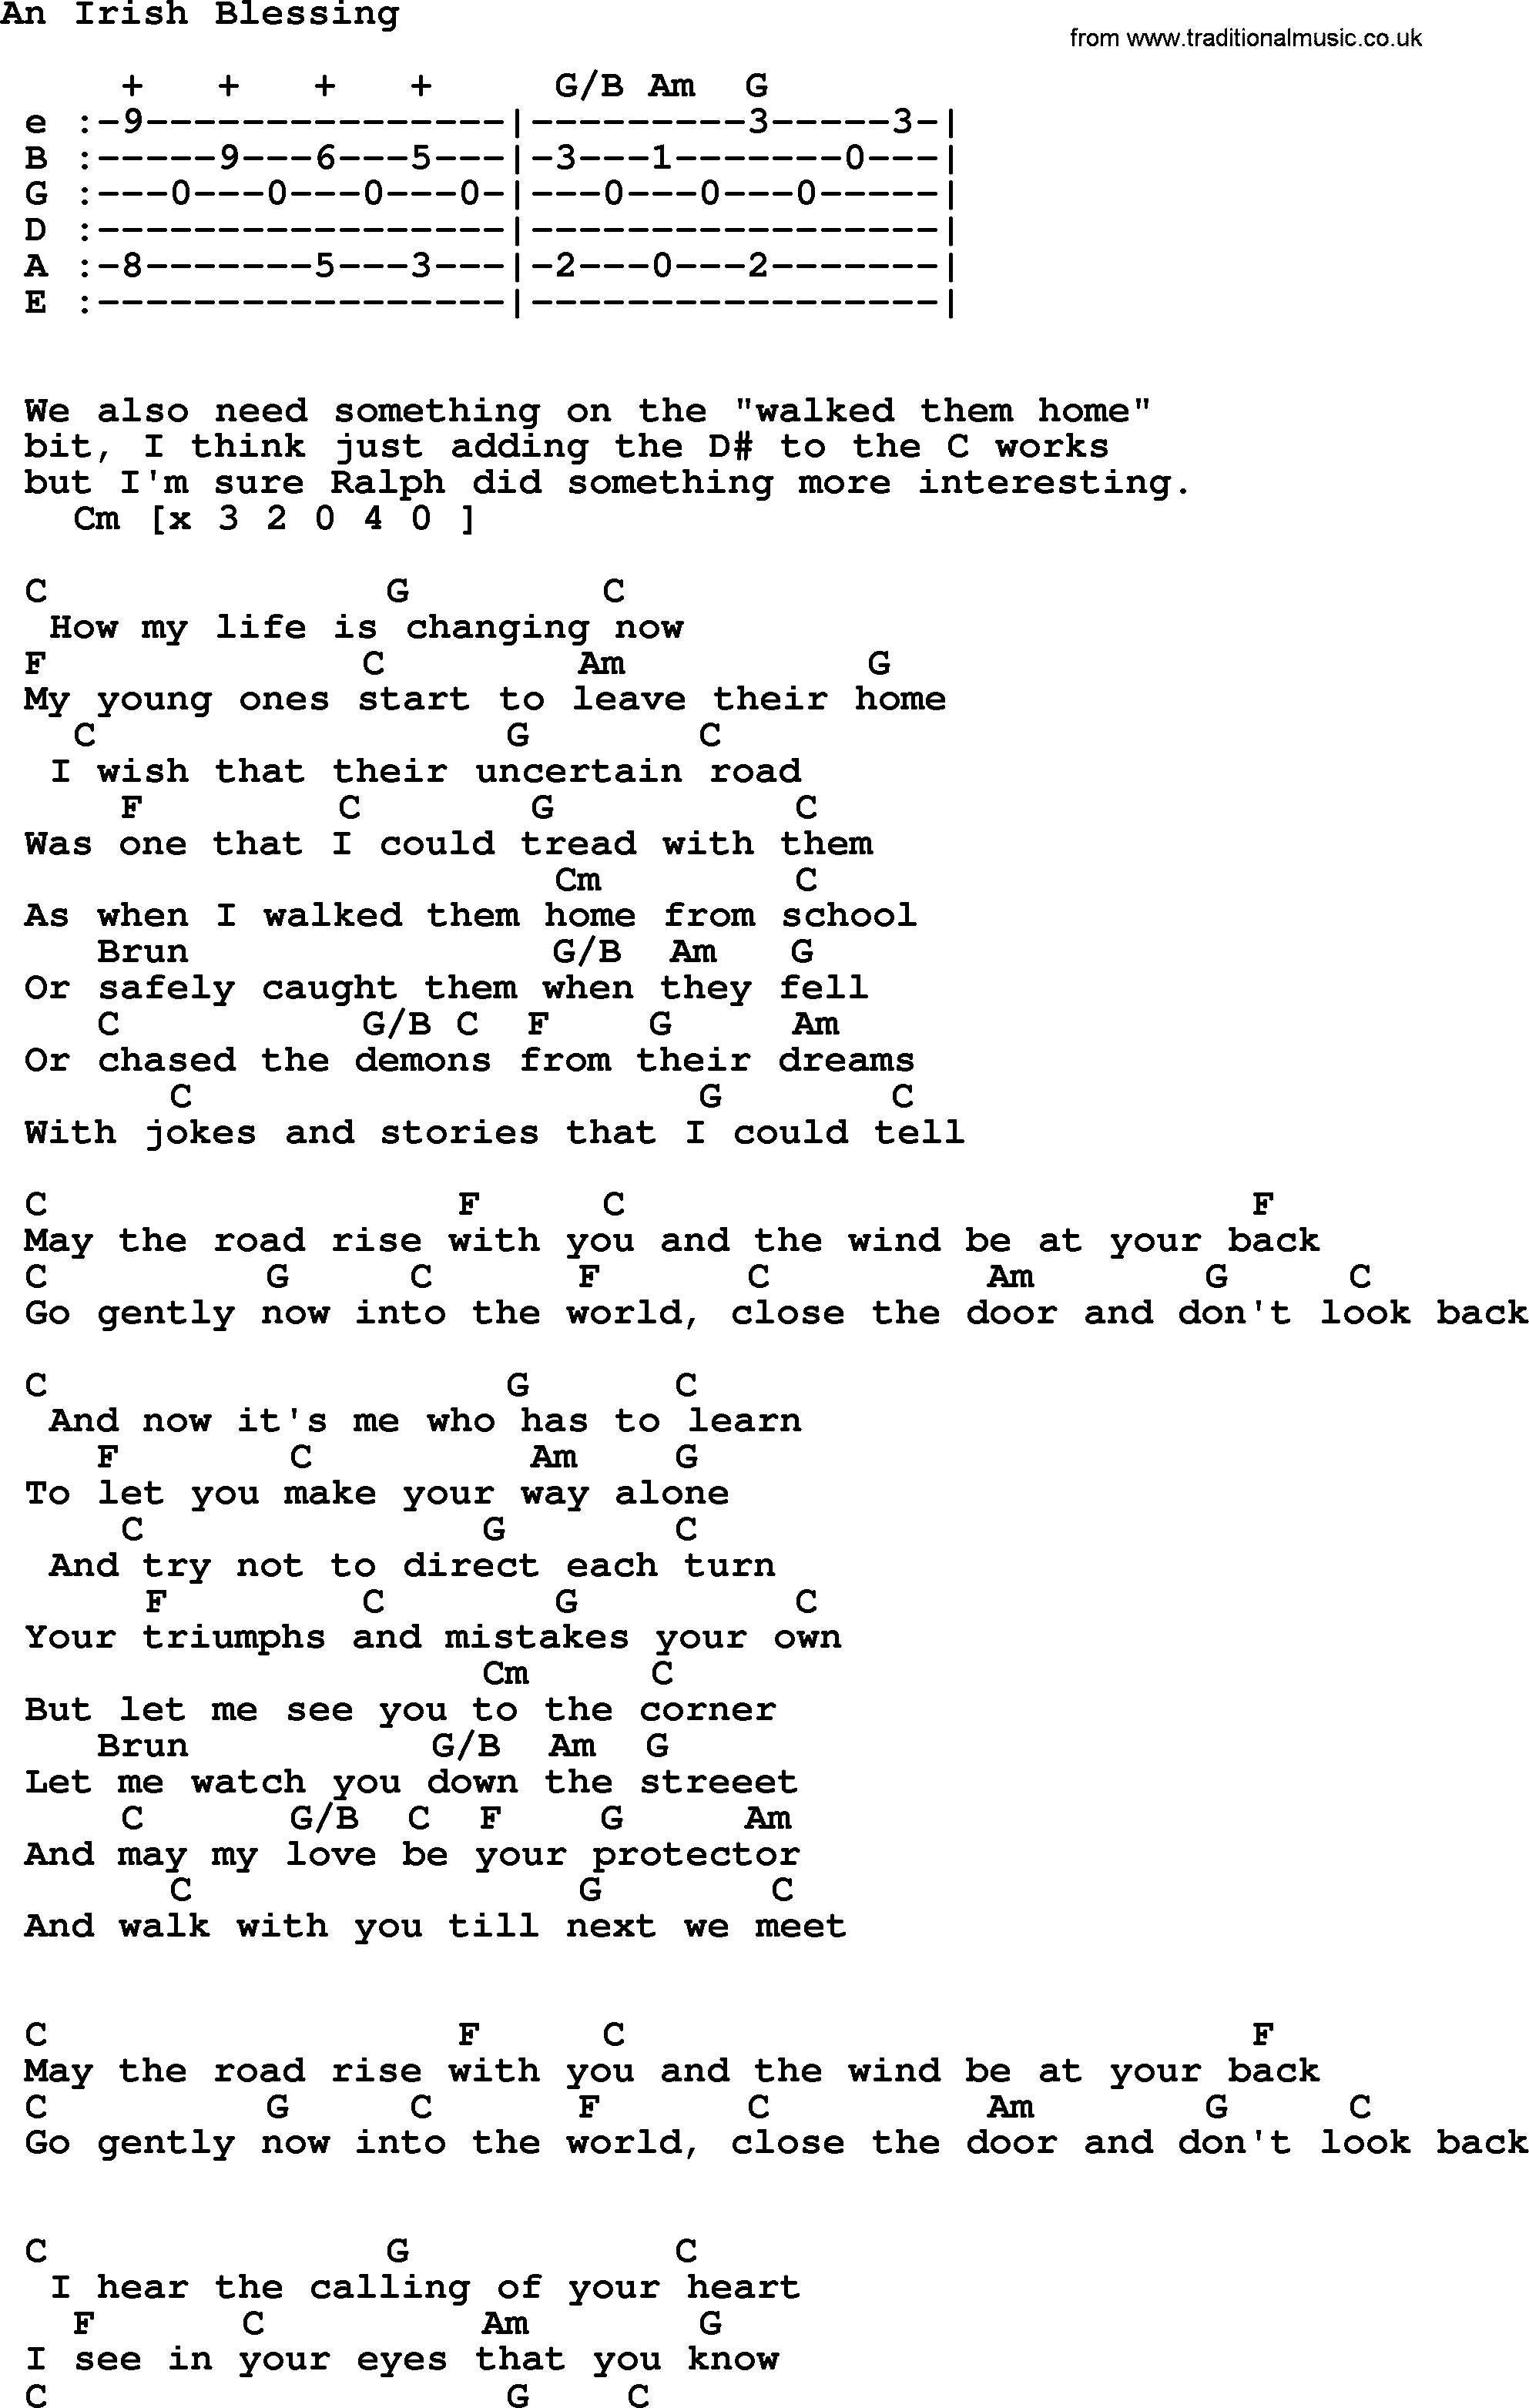 Ralph McTell Song: An Irish Blessing, lyrics and chords